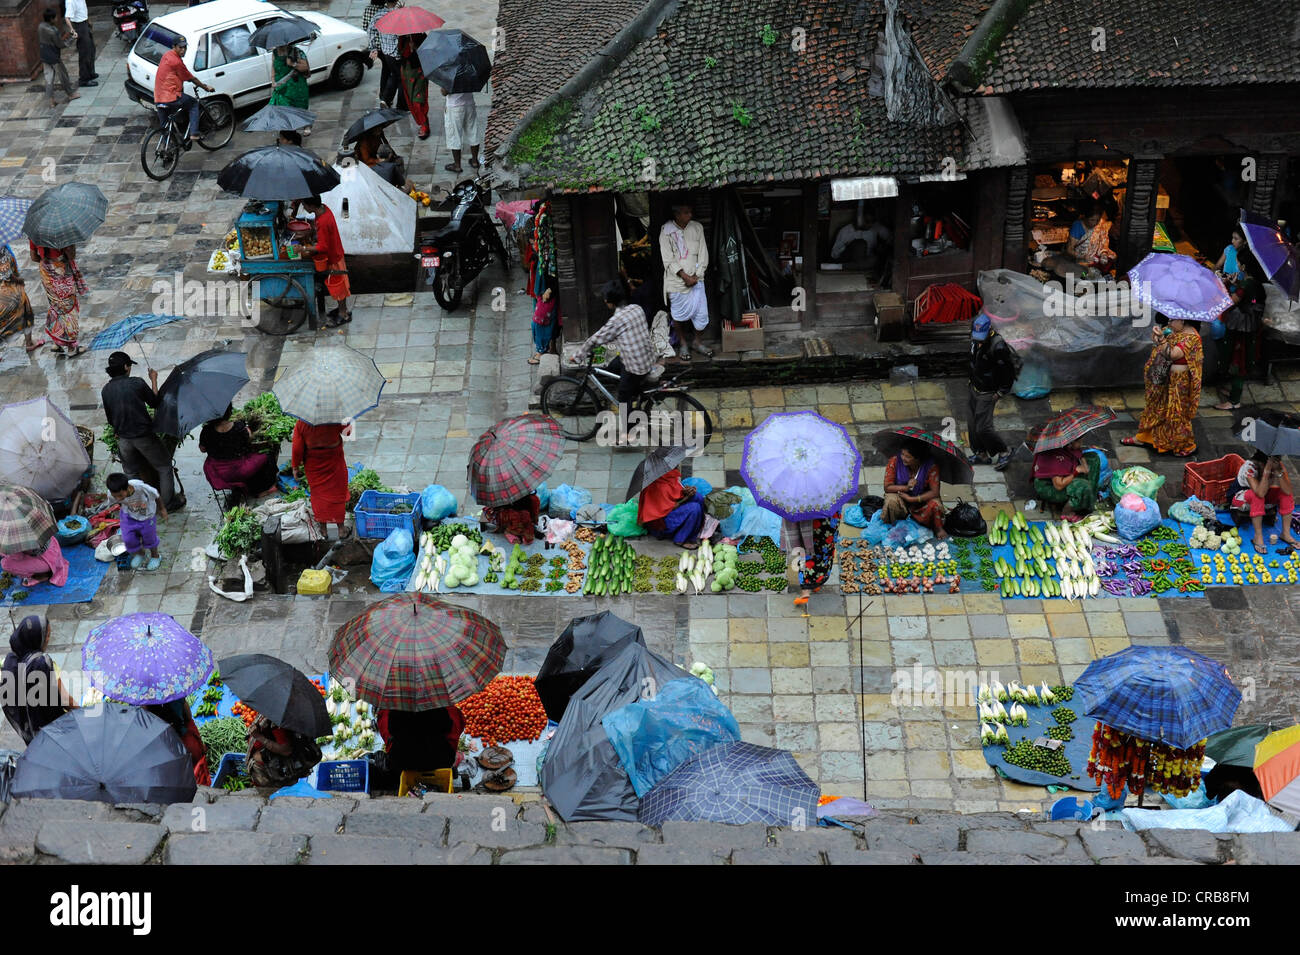 Royal Square, Durbar Square with market during rainy weather, Bagmati, Kathmandu, Nepal, South Asia, Asia Stock Photo